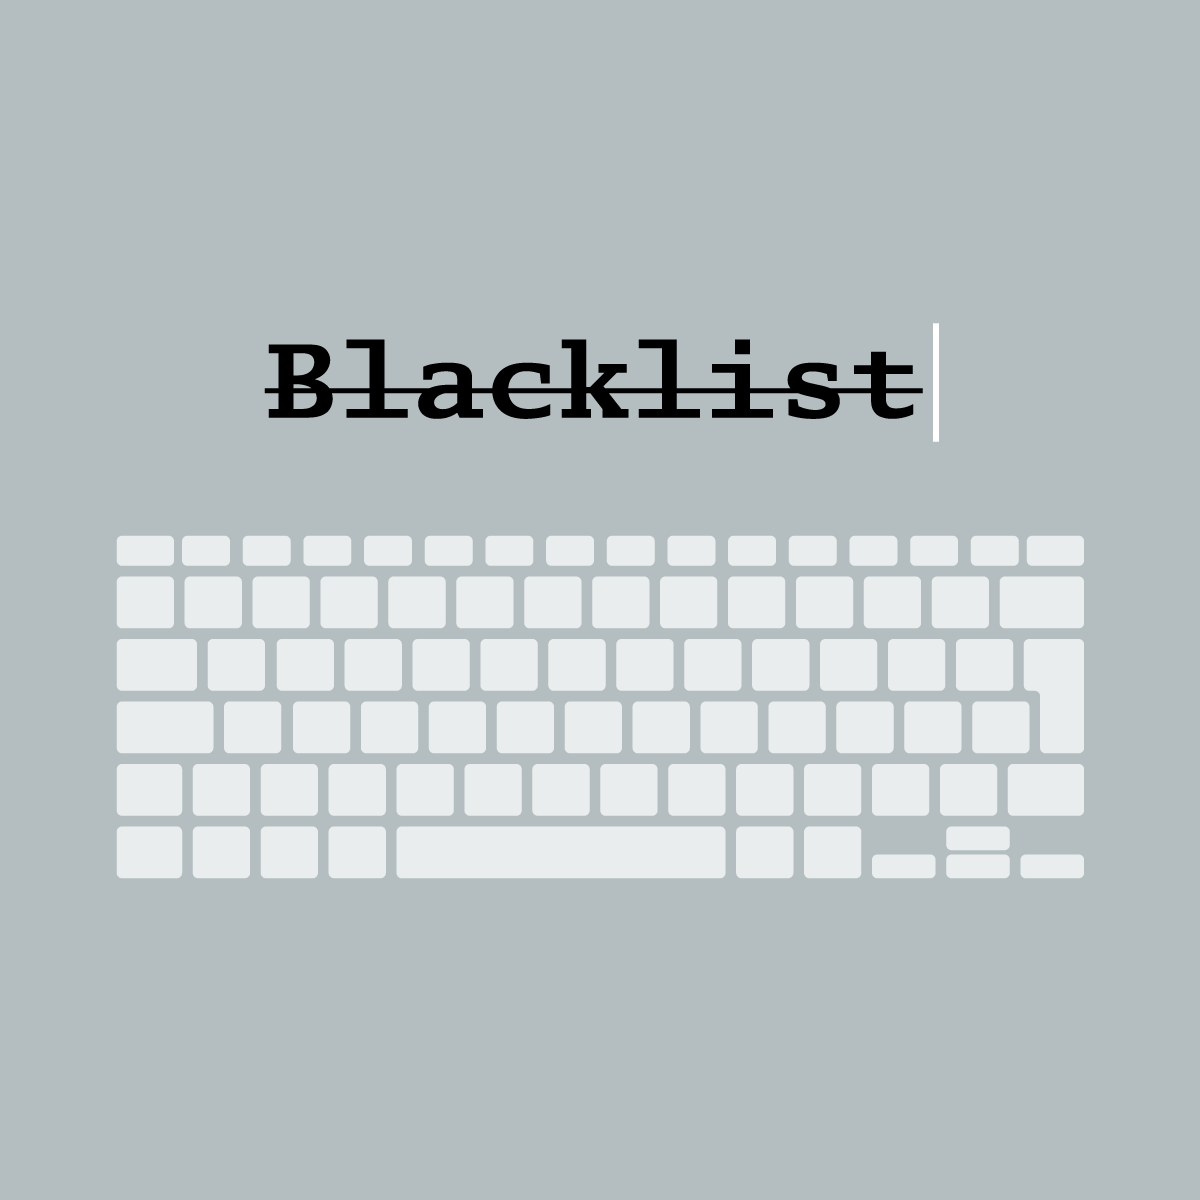 Blacklist Term